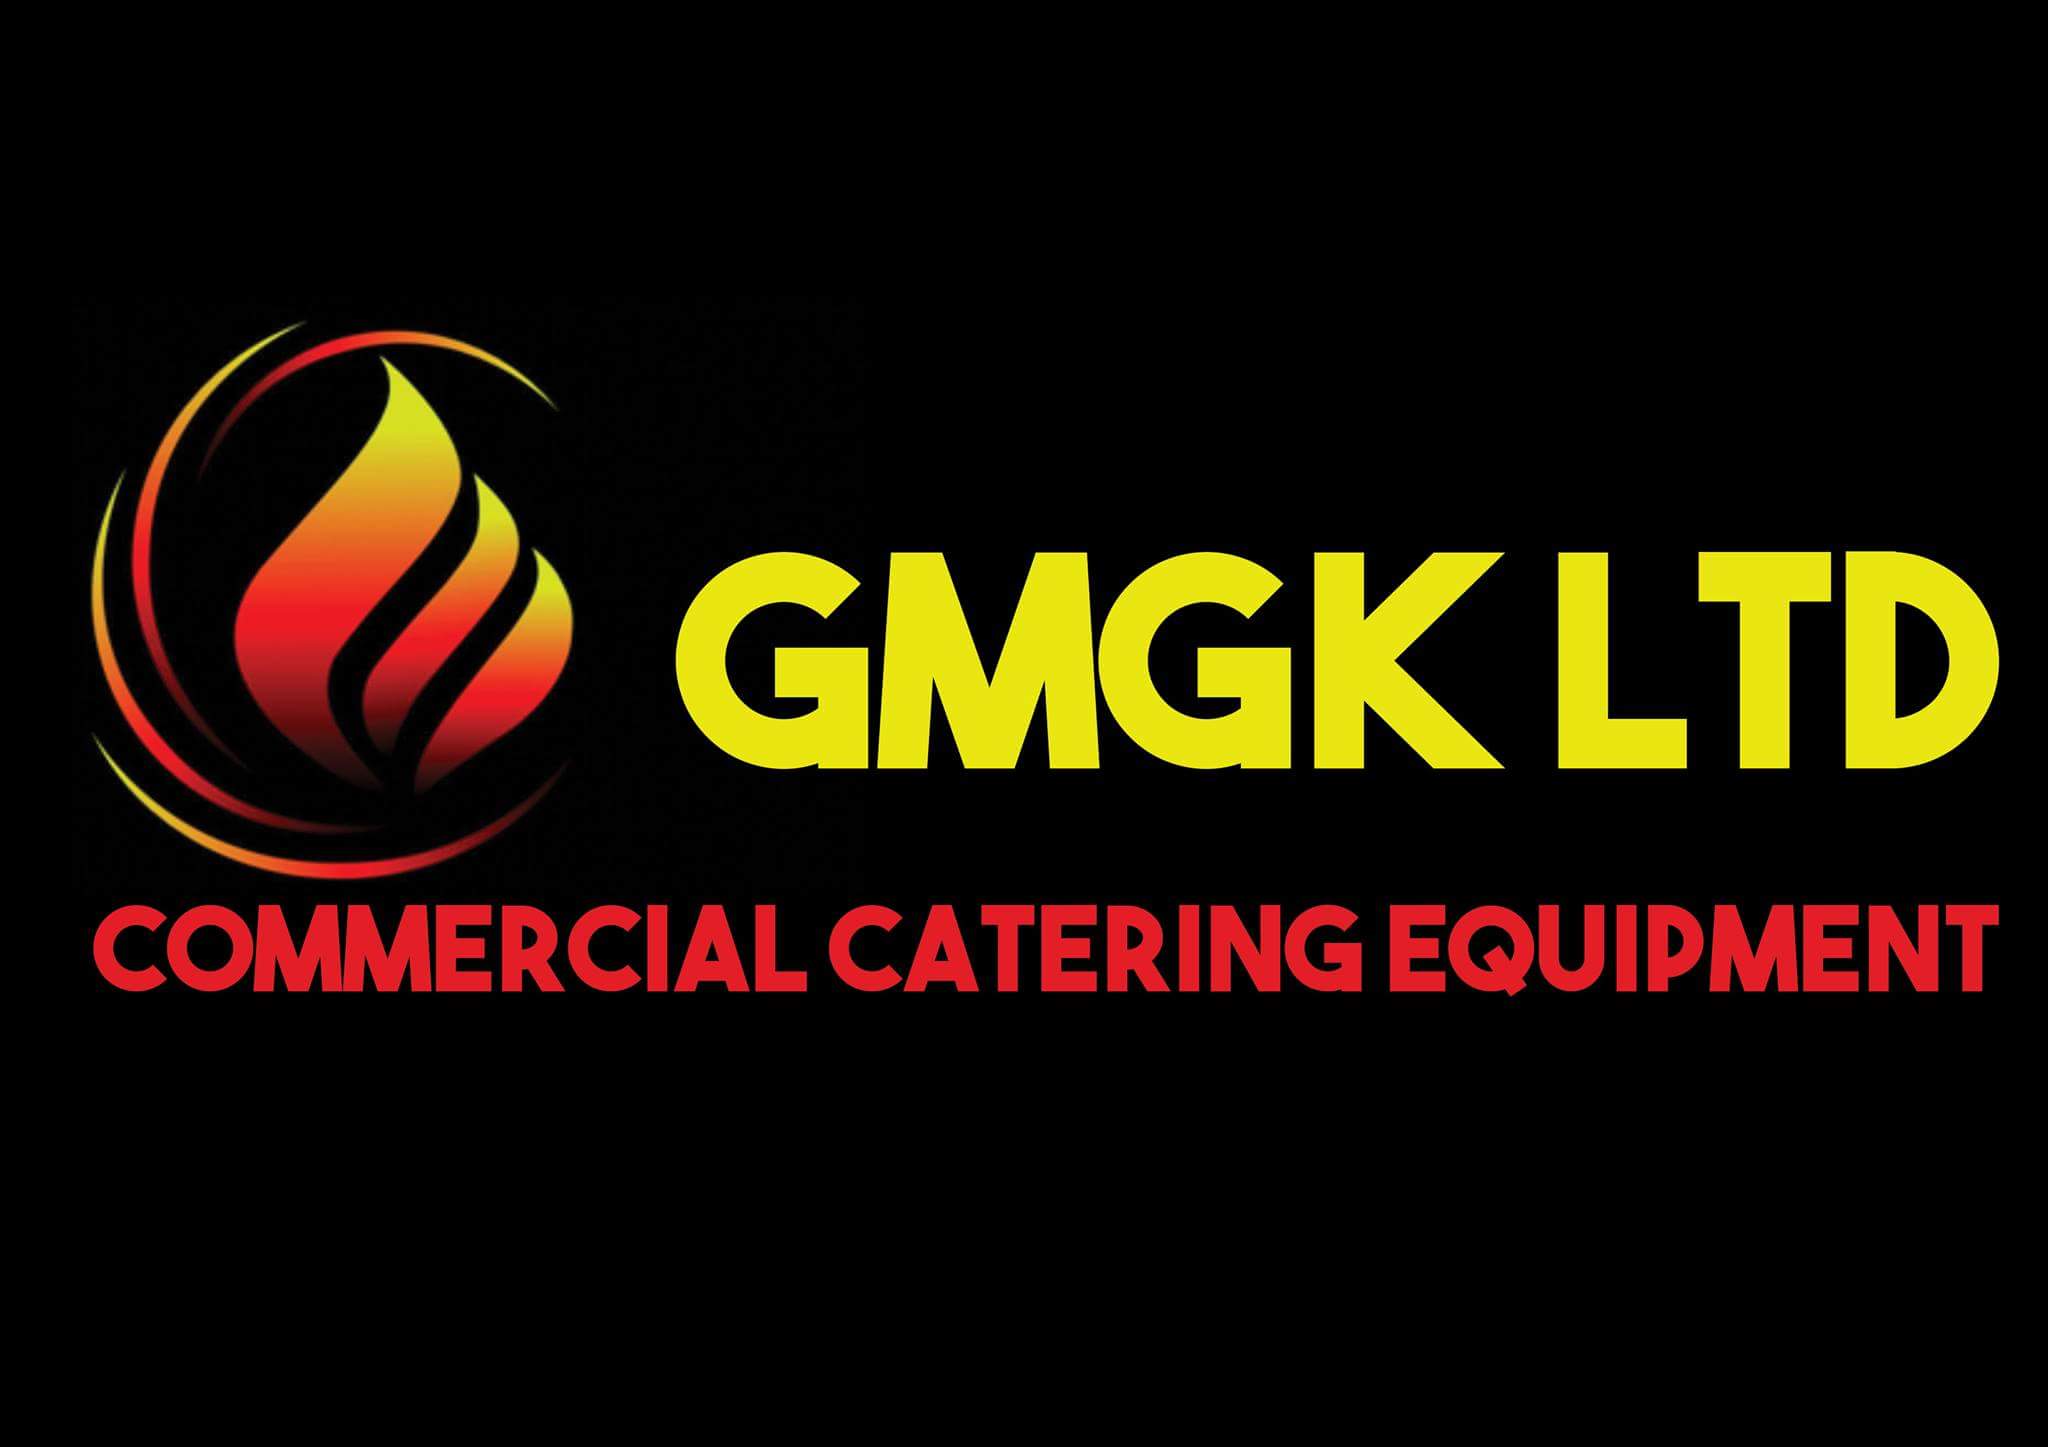 GMGK Ltd